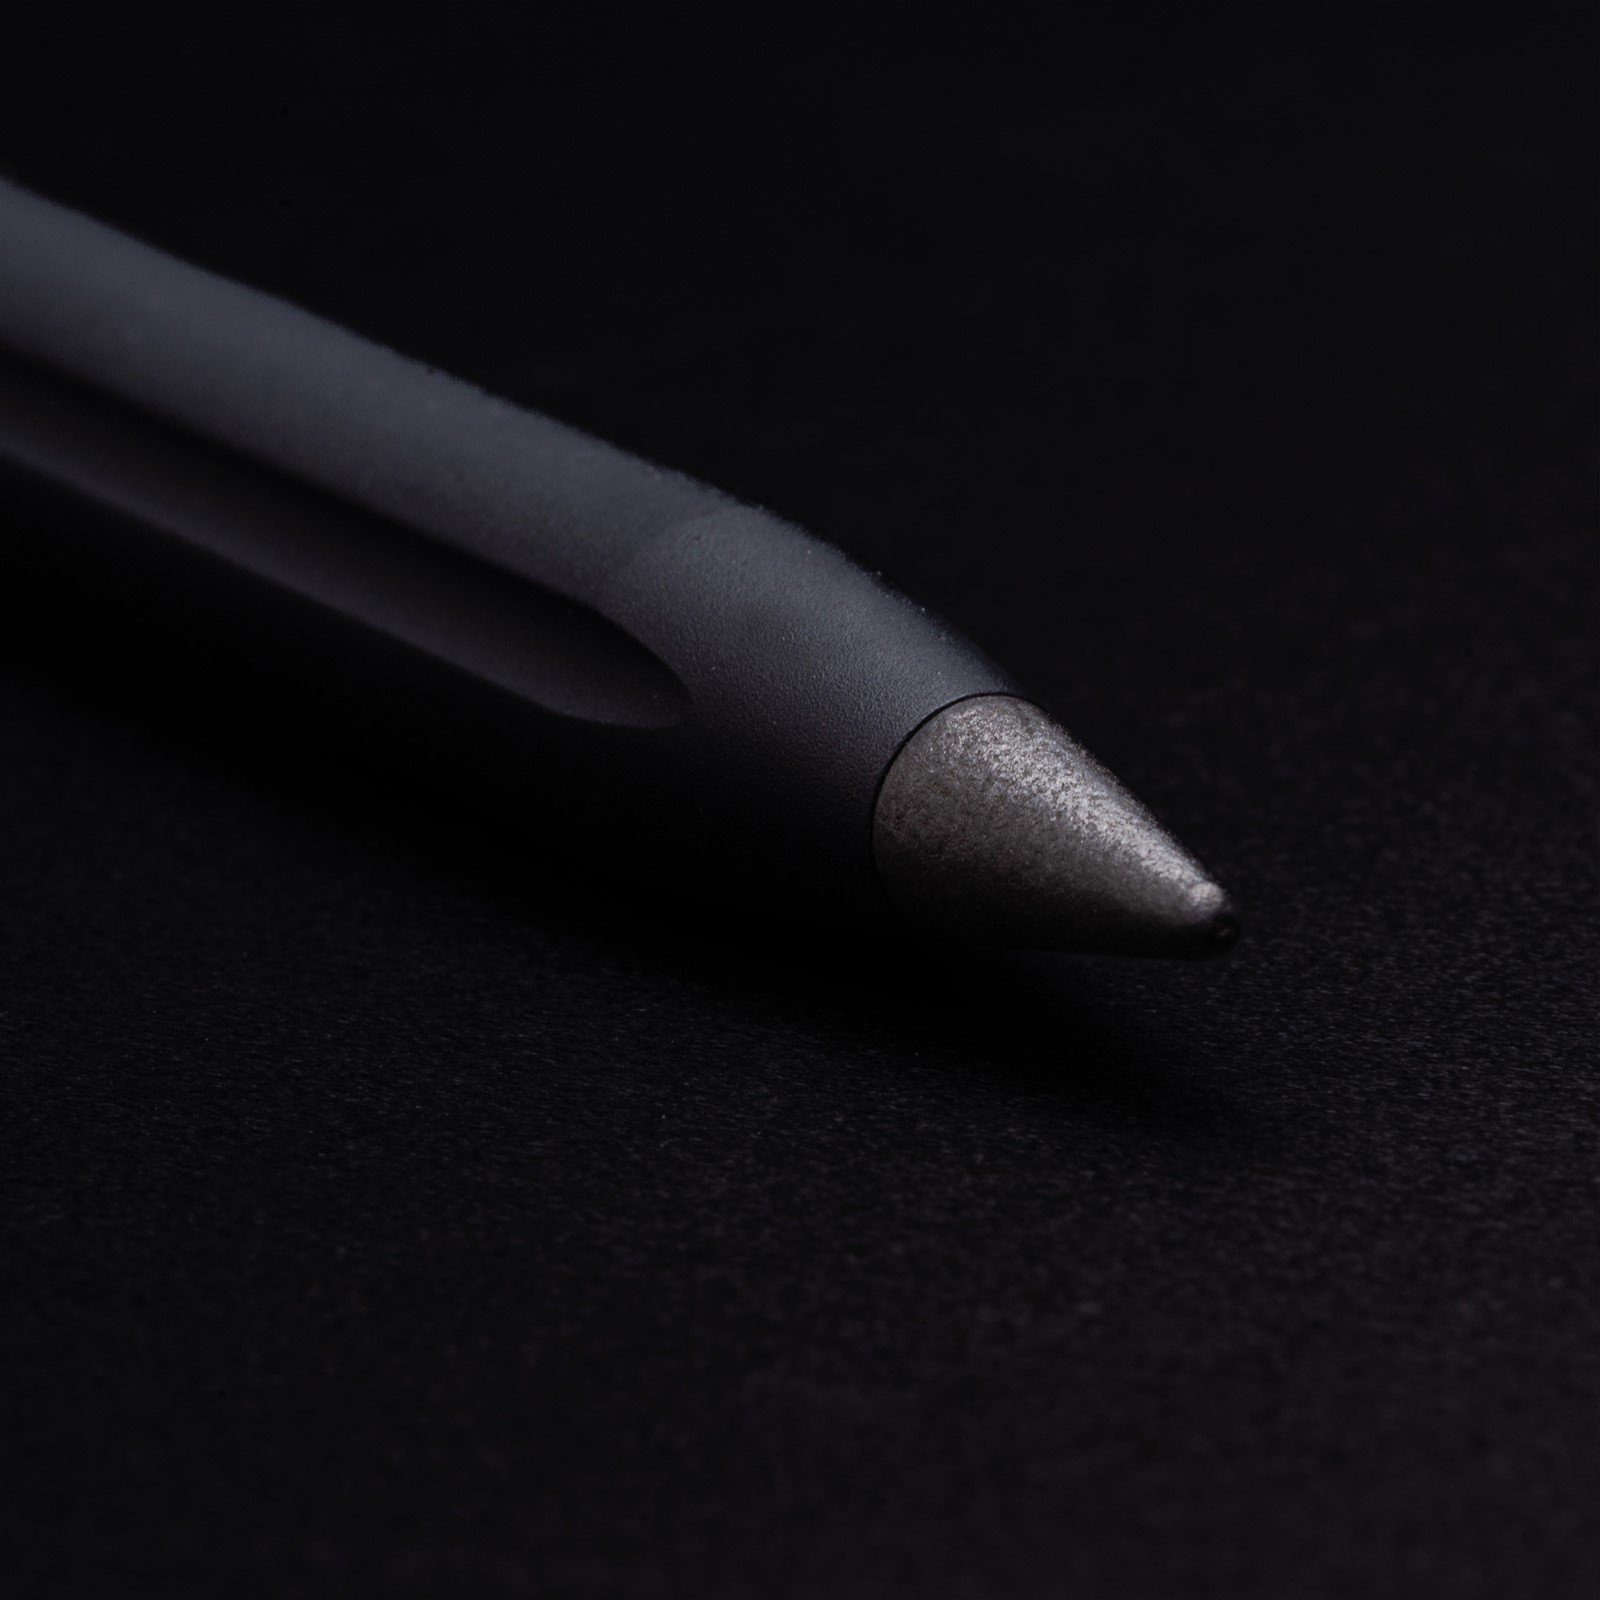 Bleier Schreibgerä, Pininfarina Smart Bleistift Bleistift Schwarz Set) (kein Grafeex Maserati Pininfarina Pencil